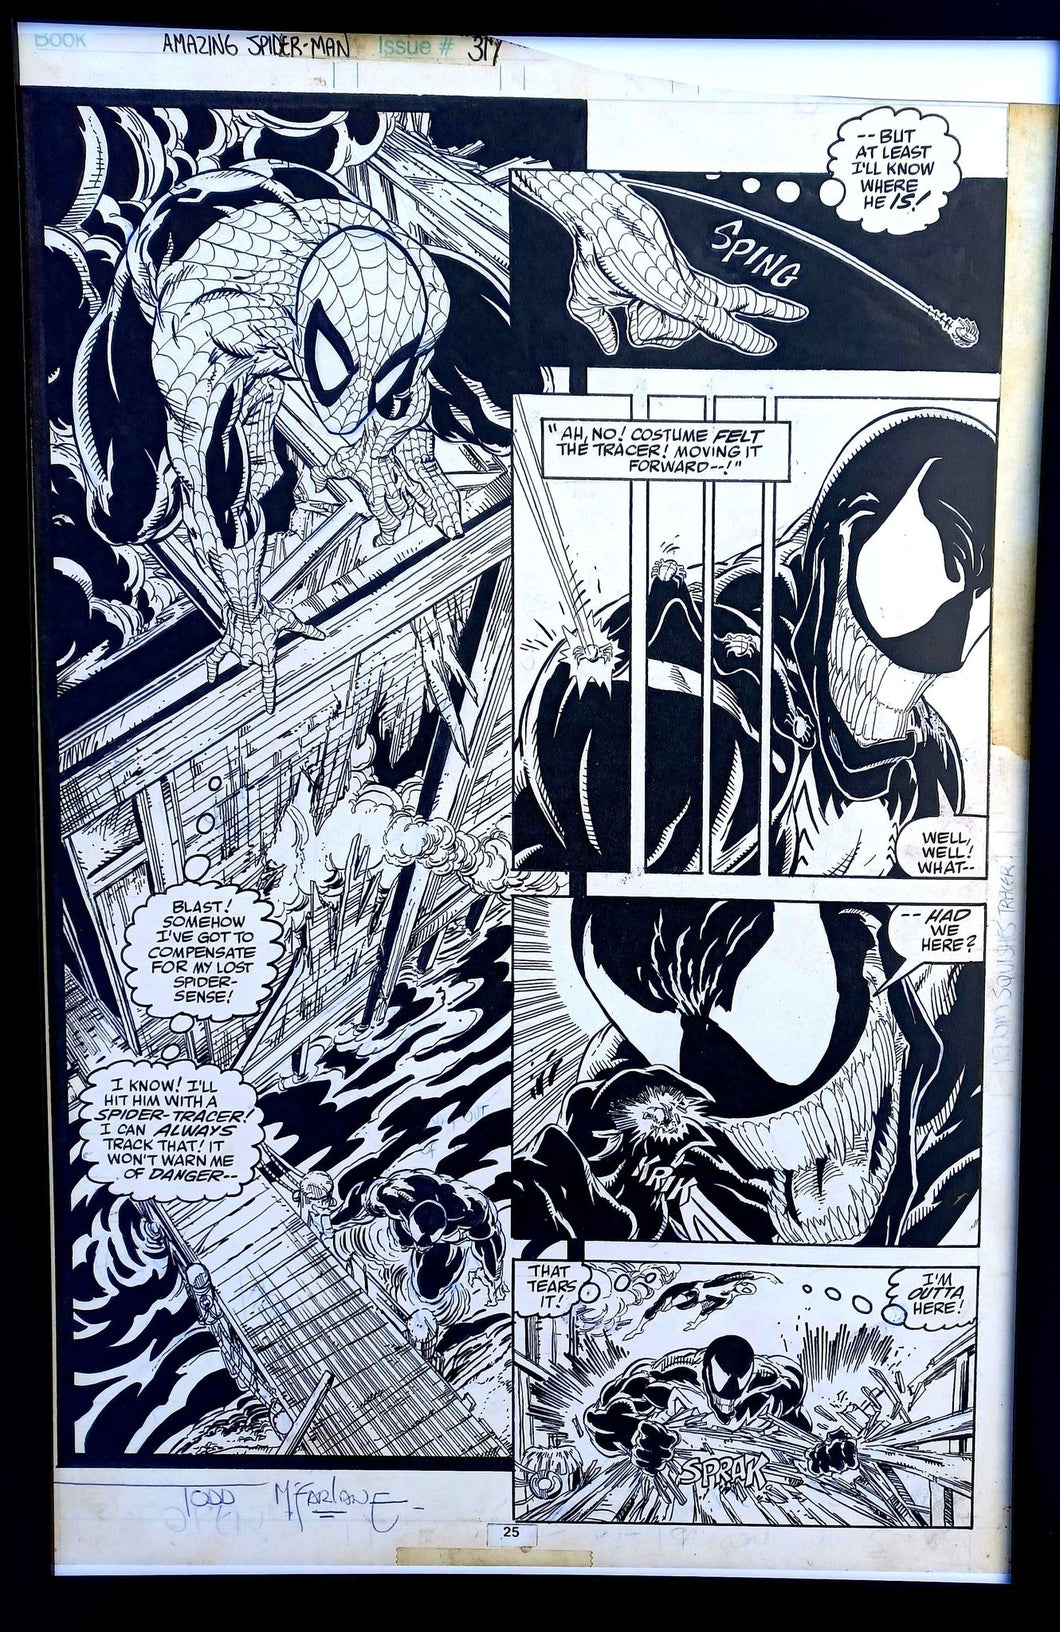 Amazing Spider-Man #317 pg. 19 by Todd McFarlane 11x17 FRAMED Original Art Print Comic Poster